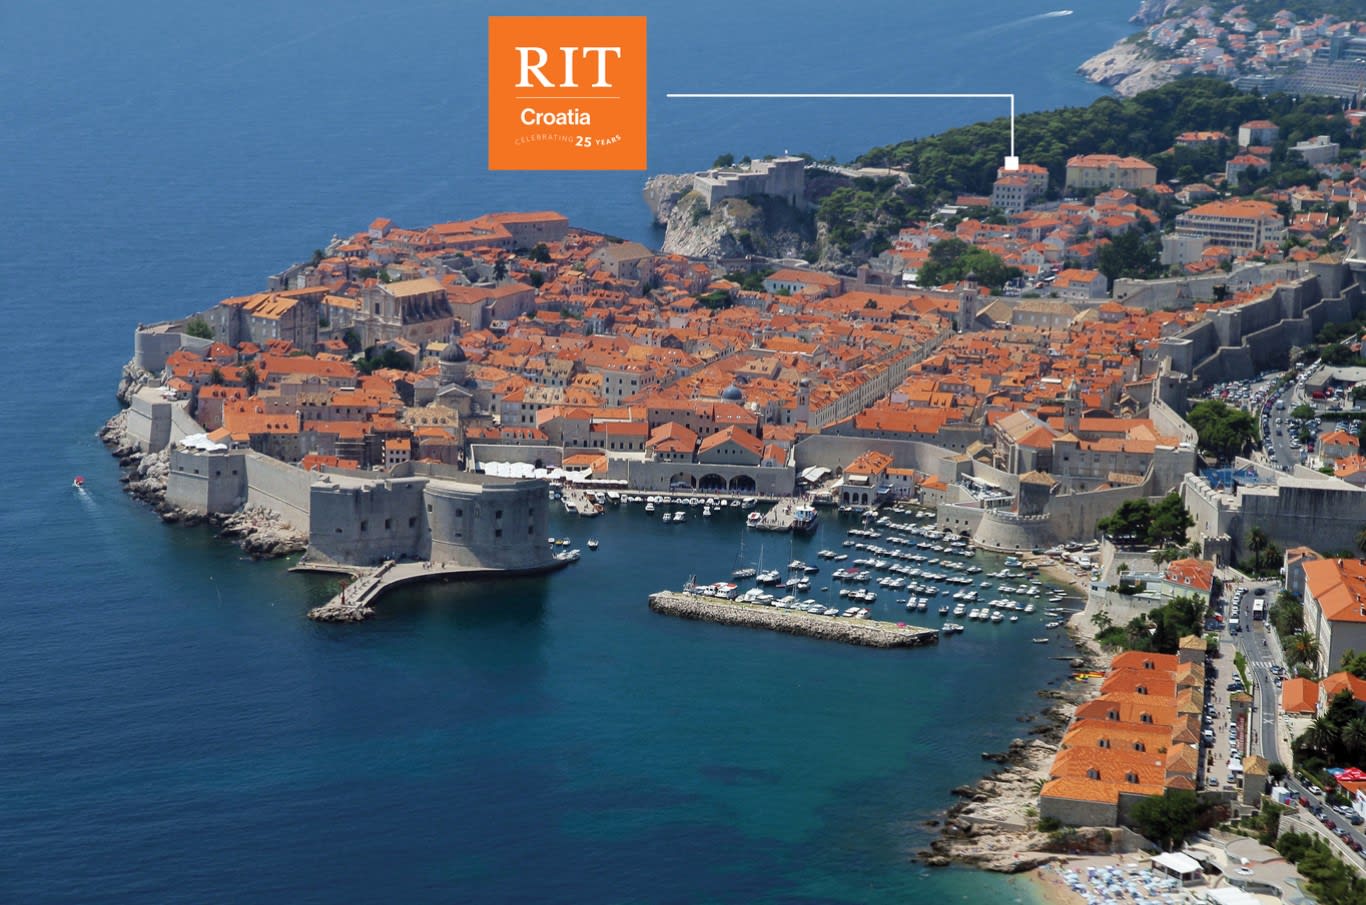 RIT Croatia in Dubrovnik